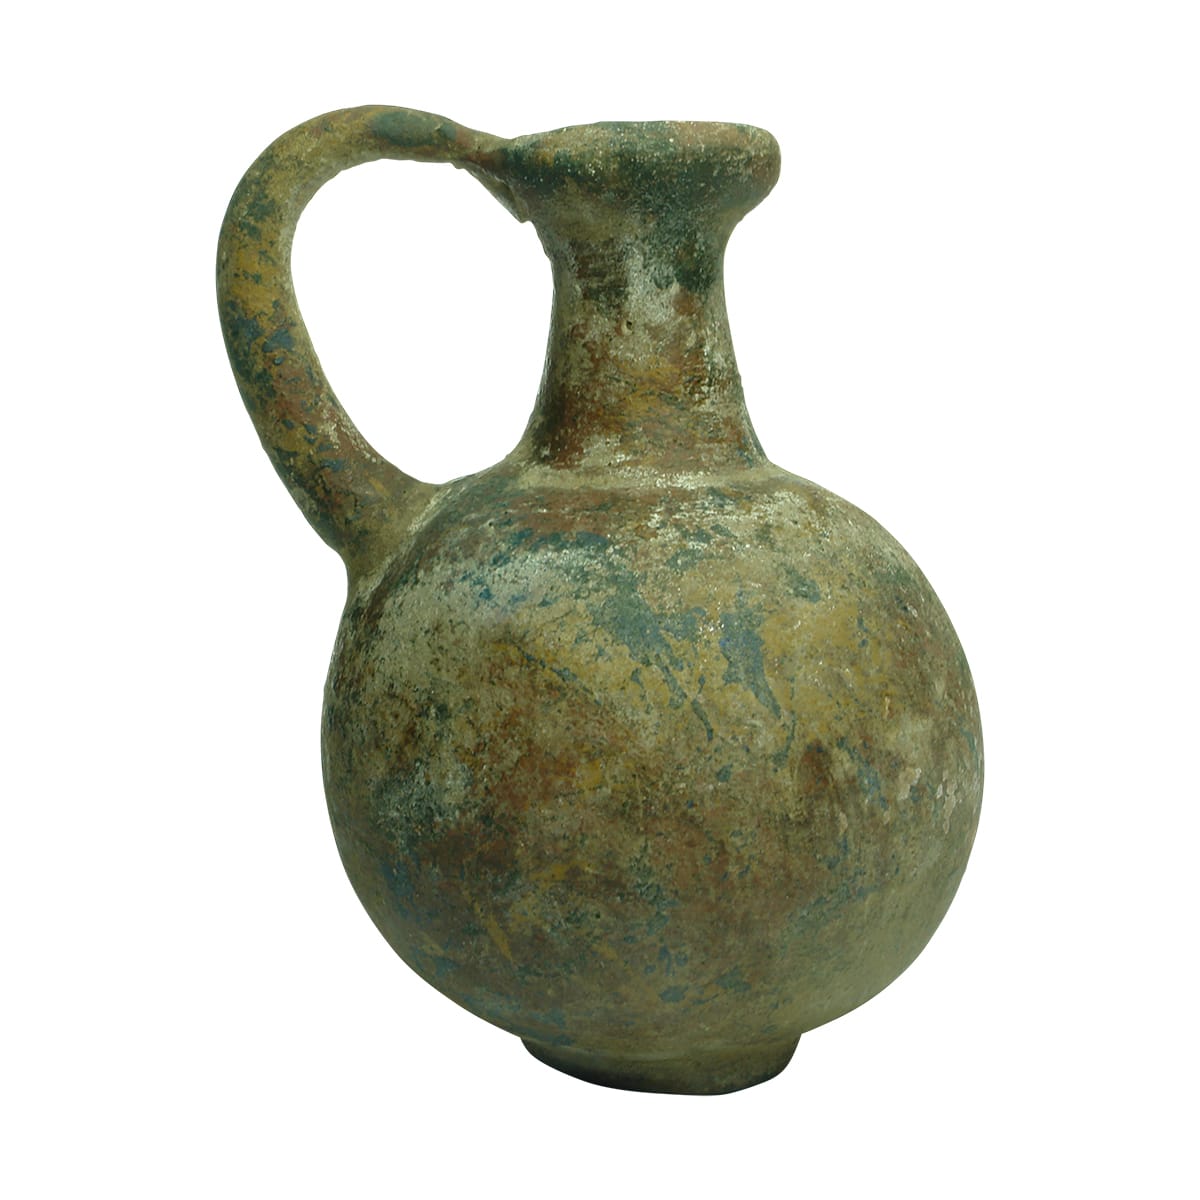 Heavy globular ancient handled jug.